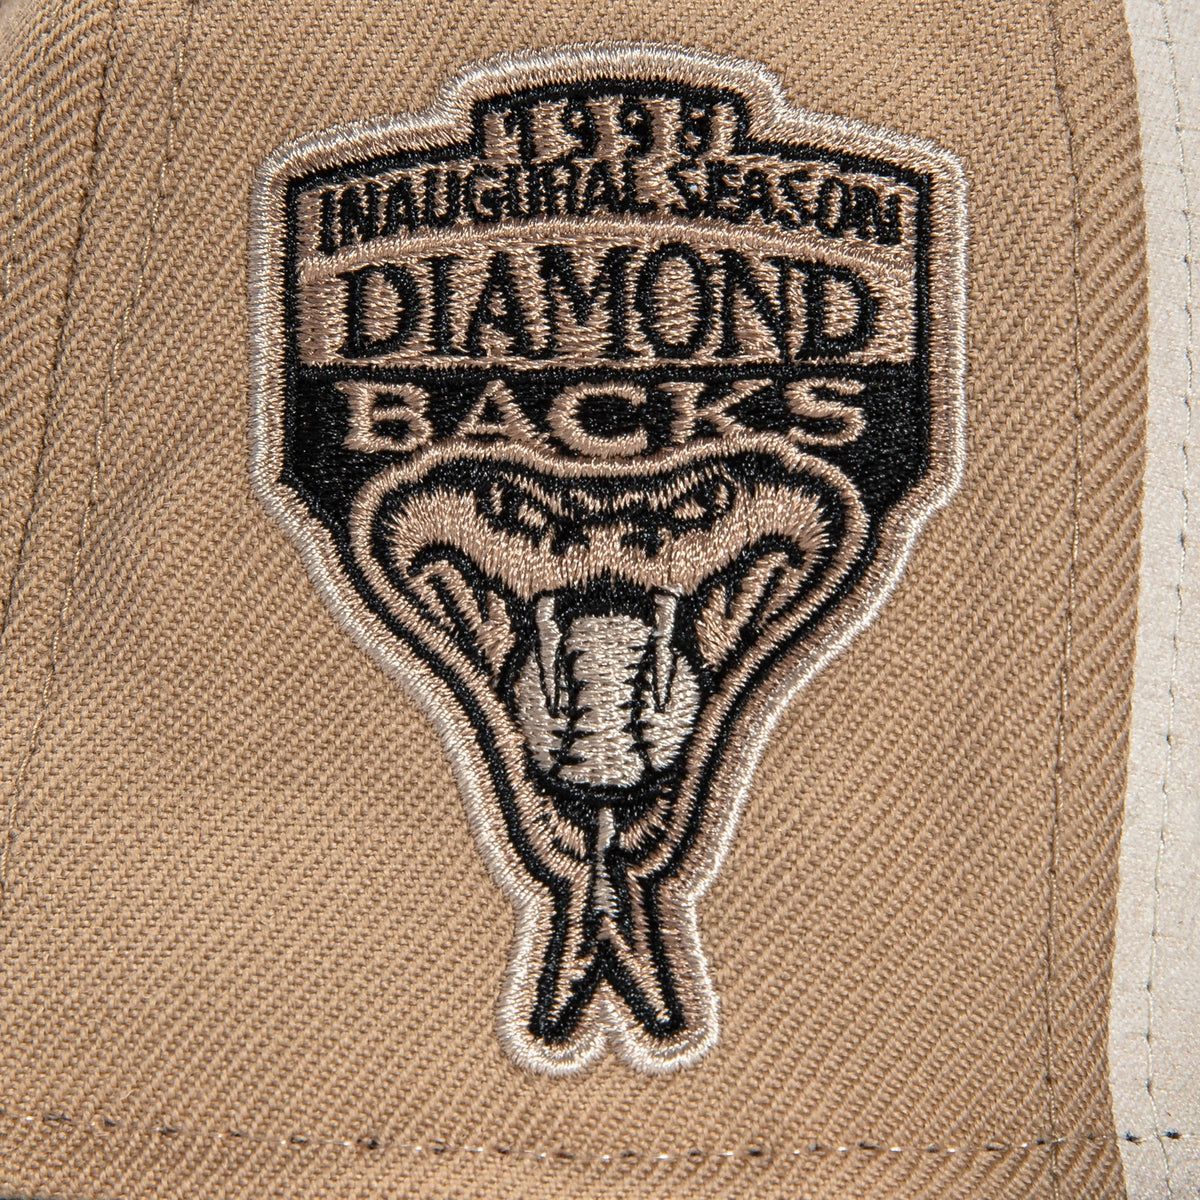 New Era 59FIFTY Arizona Diamondbacks City Connect Patch Snake Hat - Tan, Sedona Red Tan/Sedona Red / 8